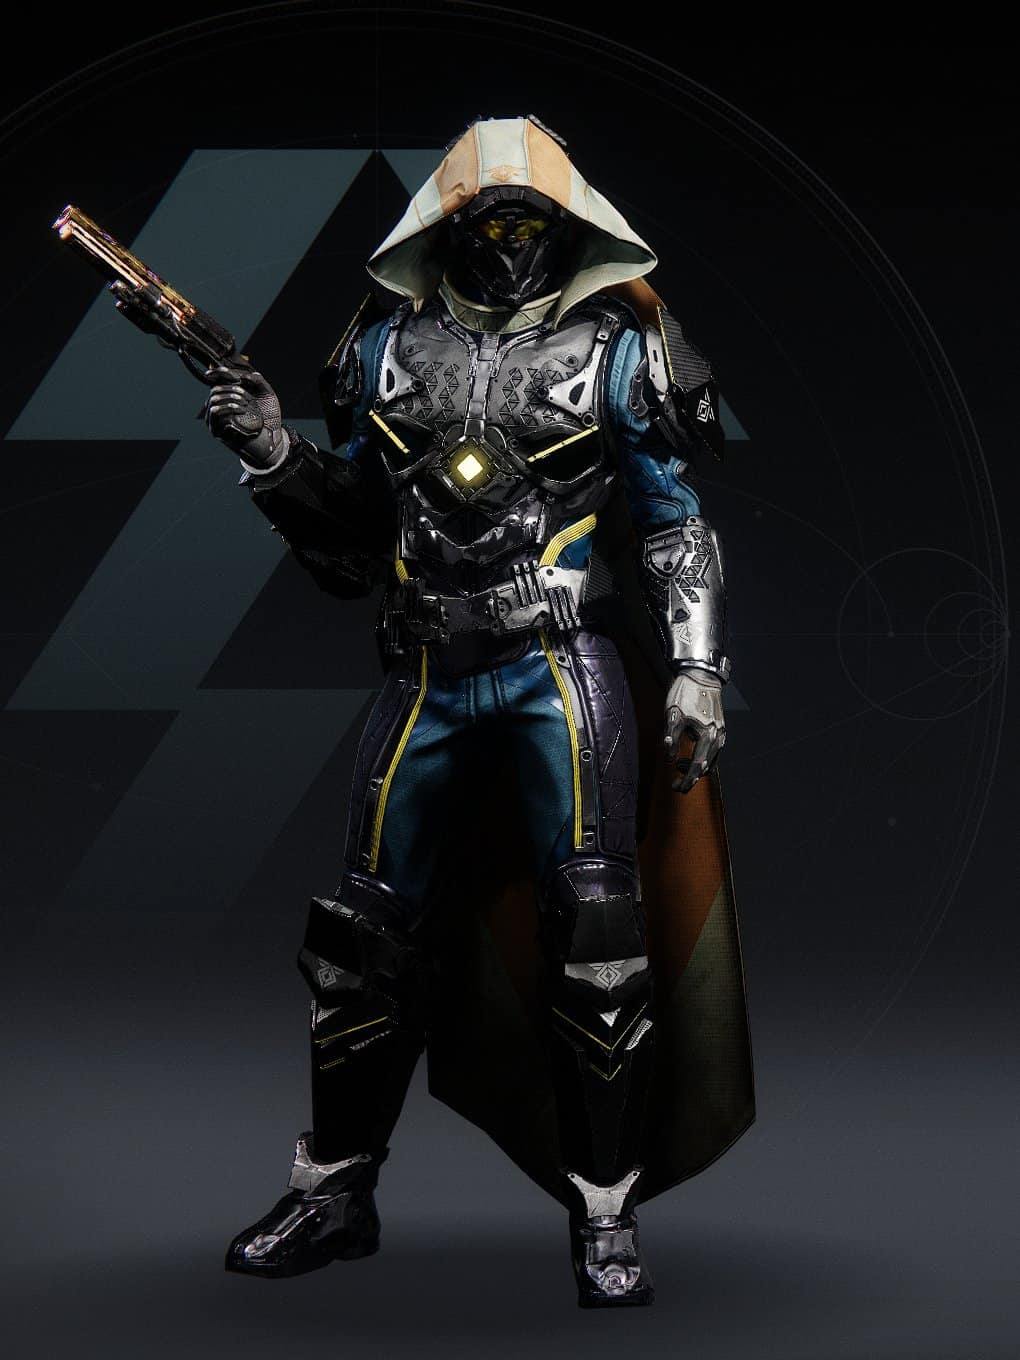 Warmind's Avatar armor Hunter